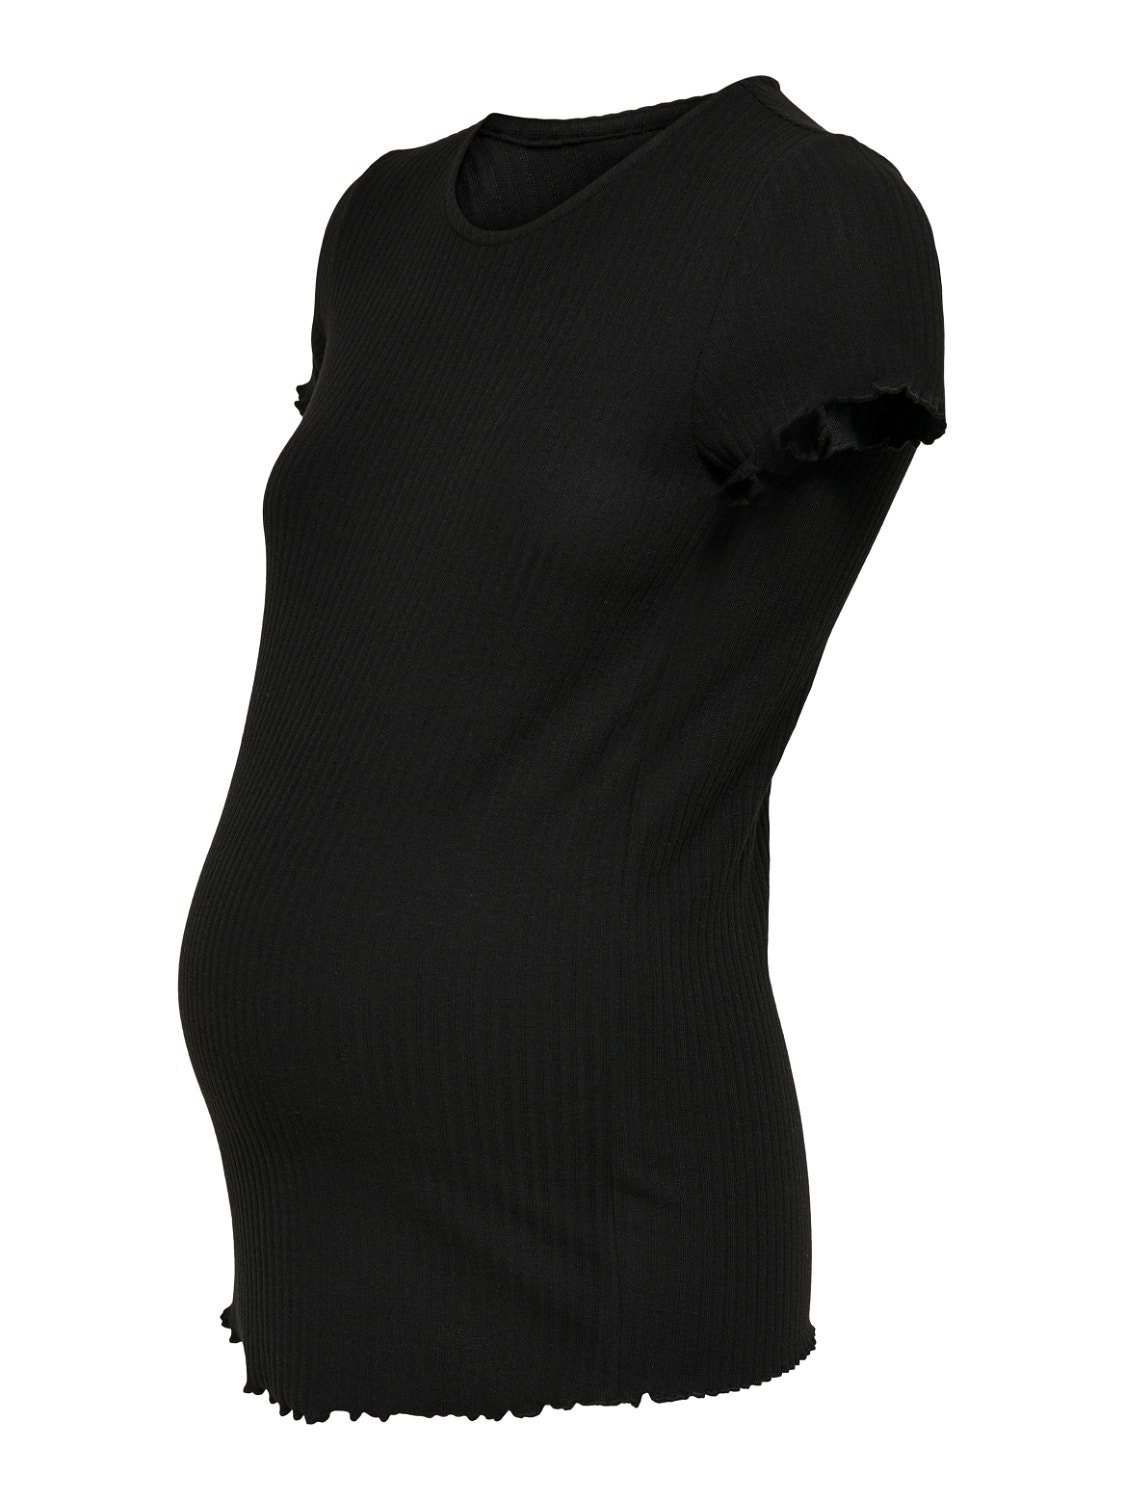 ONLY Regular Fit Round Neck T-Shirt -Black - 15242107